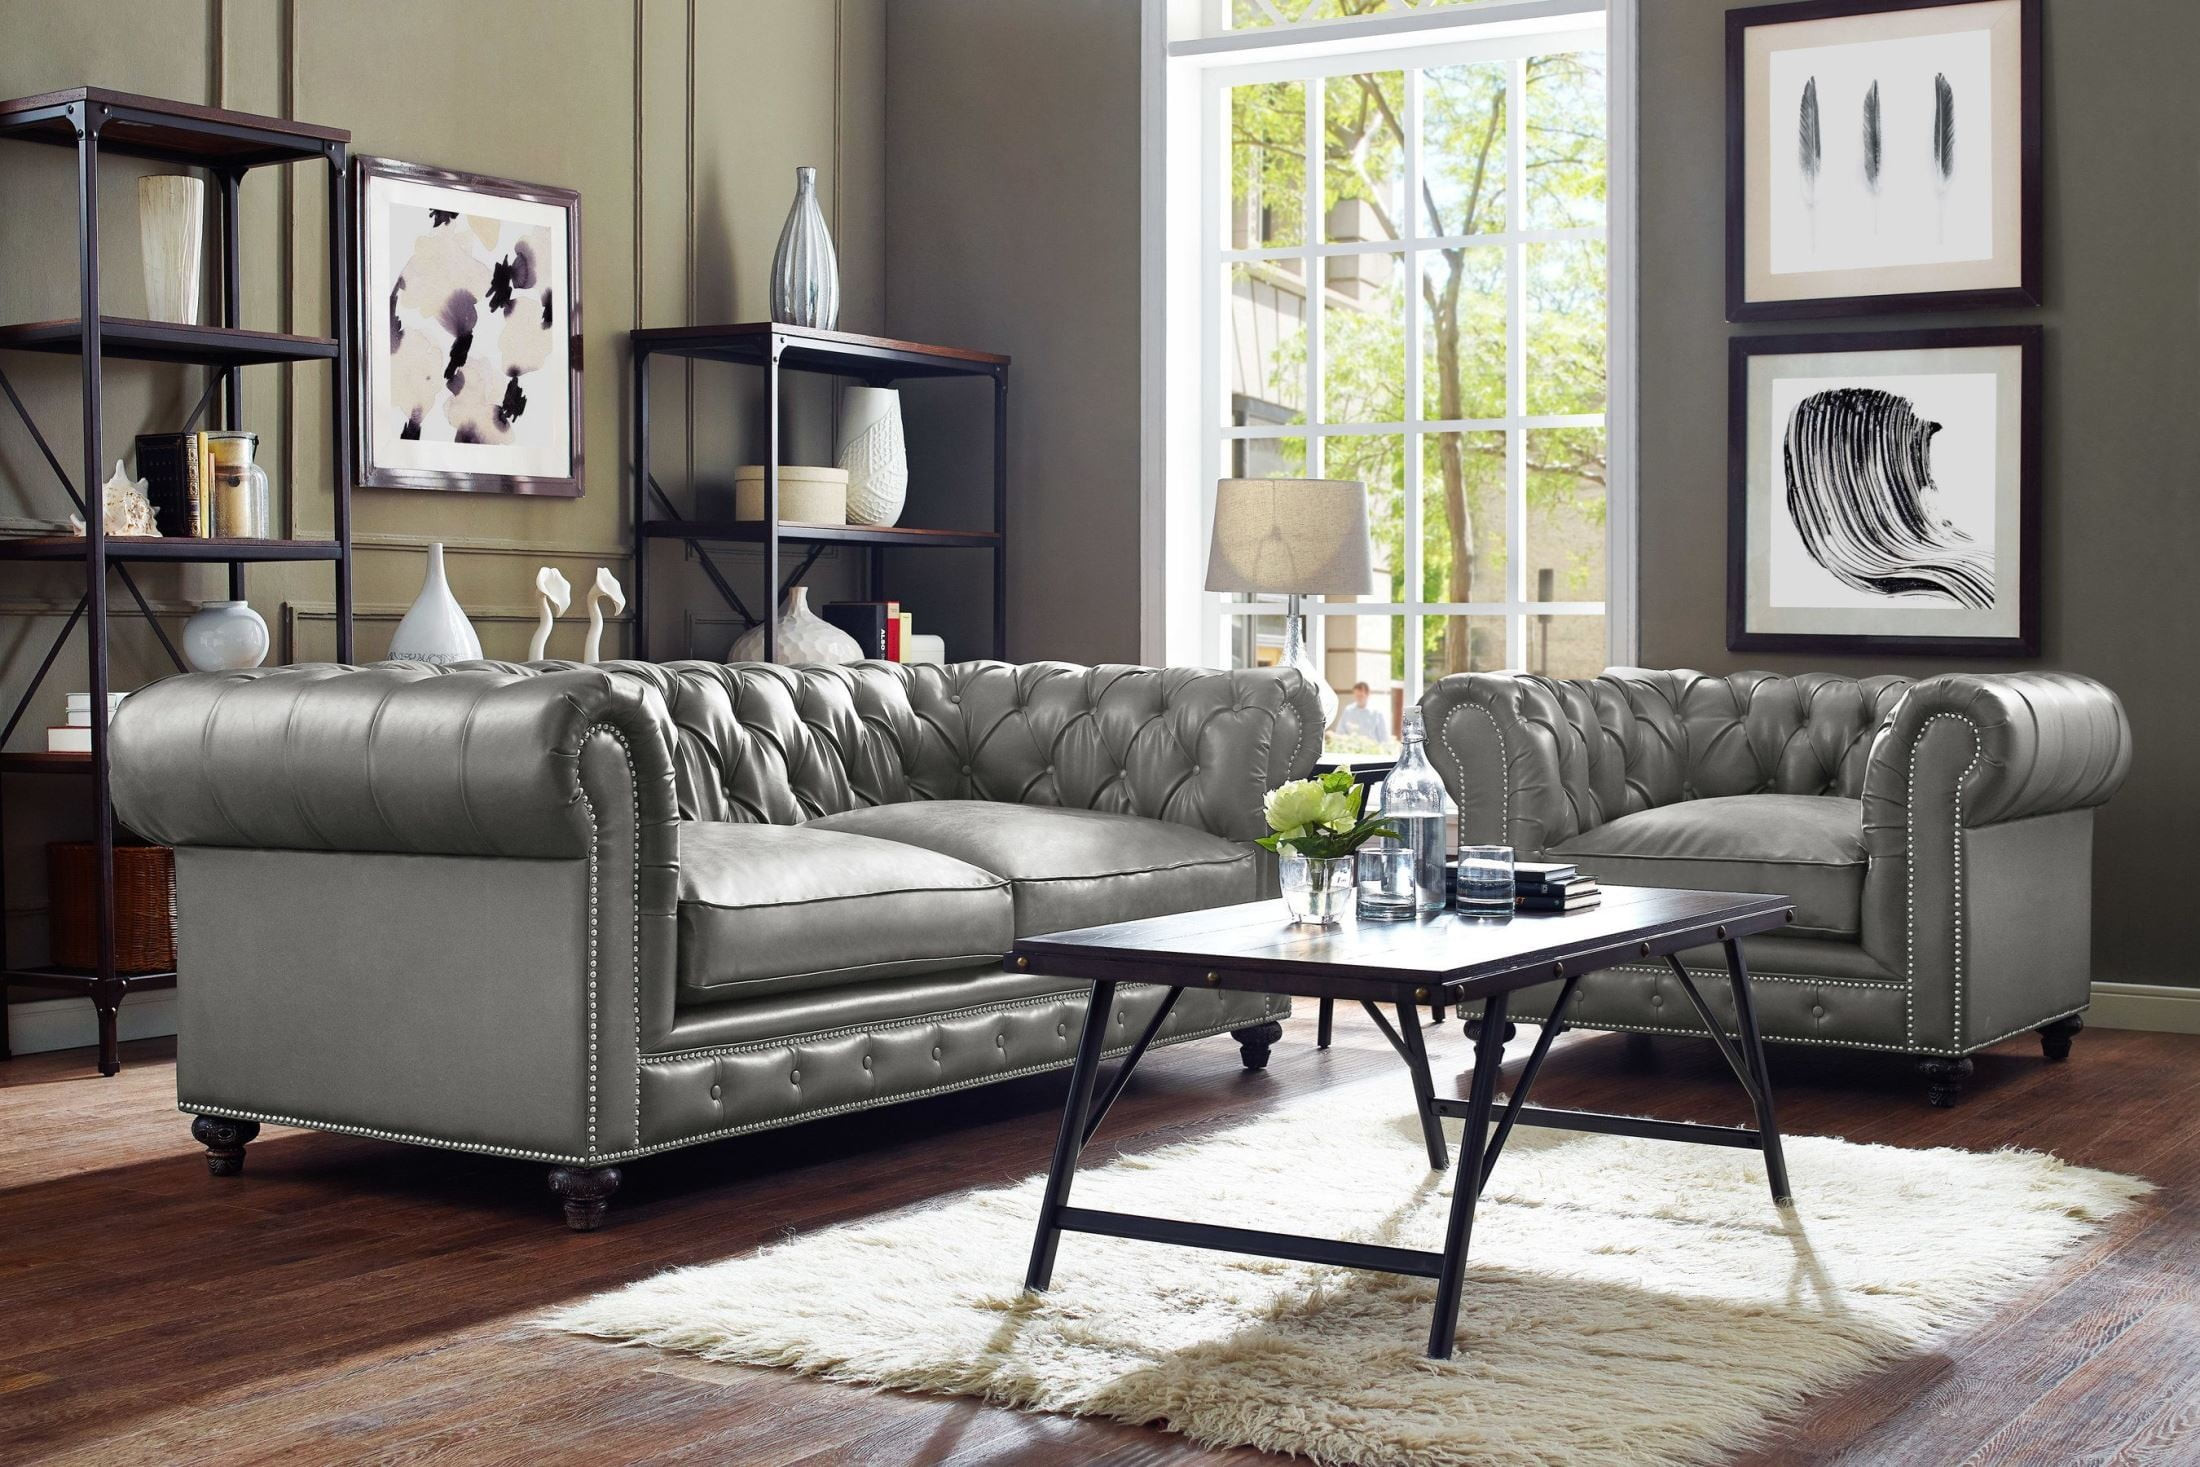 Rustic Living Room Furniture Sets
 Durango Rustic Grey Living Room Set from TOV